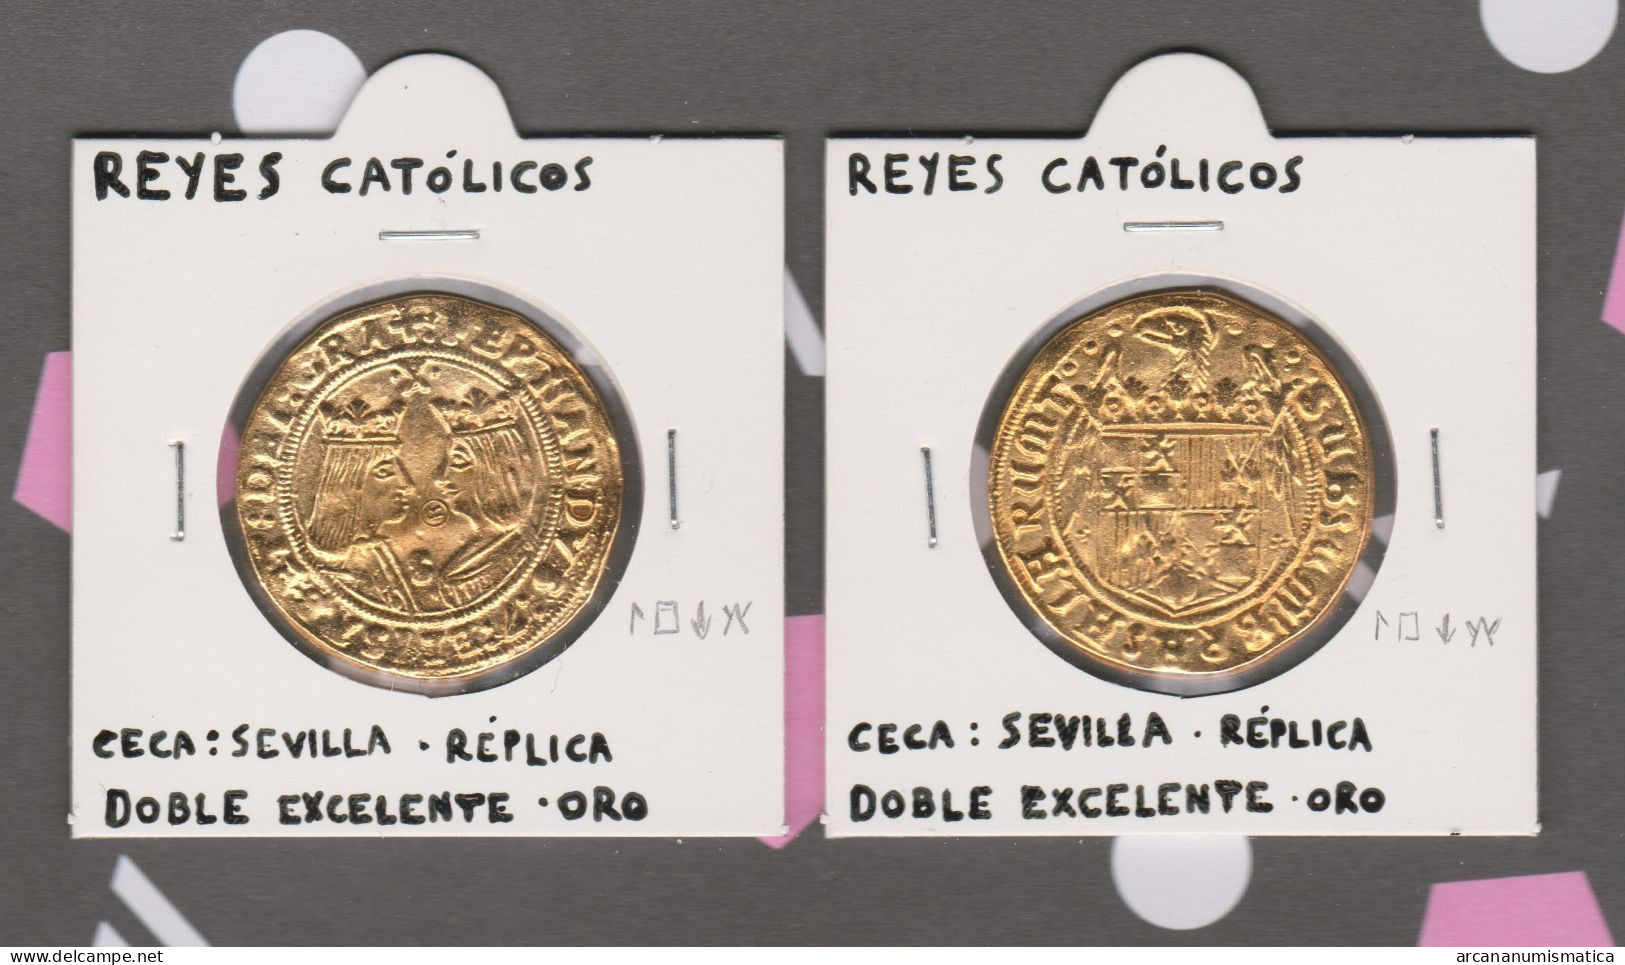 REYES CATOLICOS  DOBLE EXCELENTE - ORO CECA: SEVILLA  Réplica   T-DL-13.434 - Counterfeits